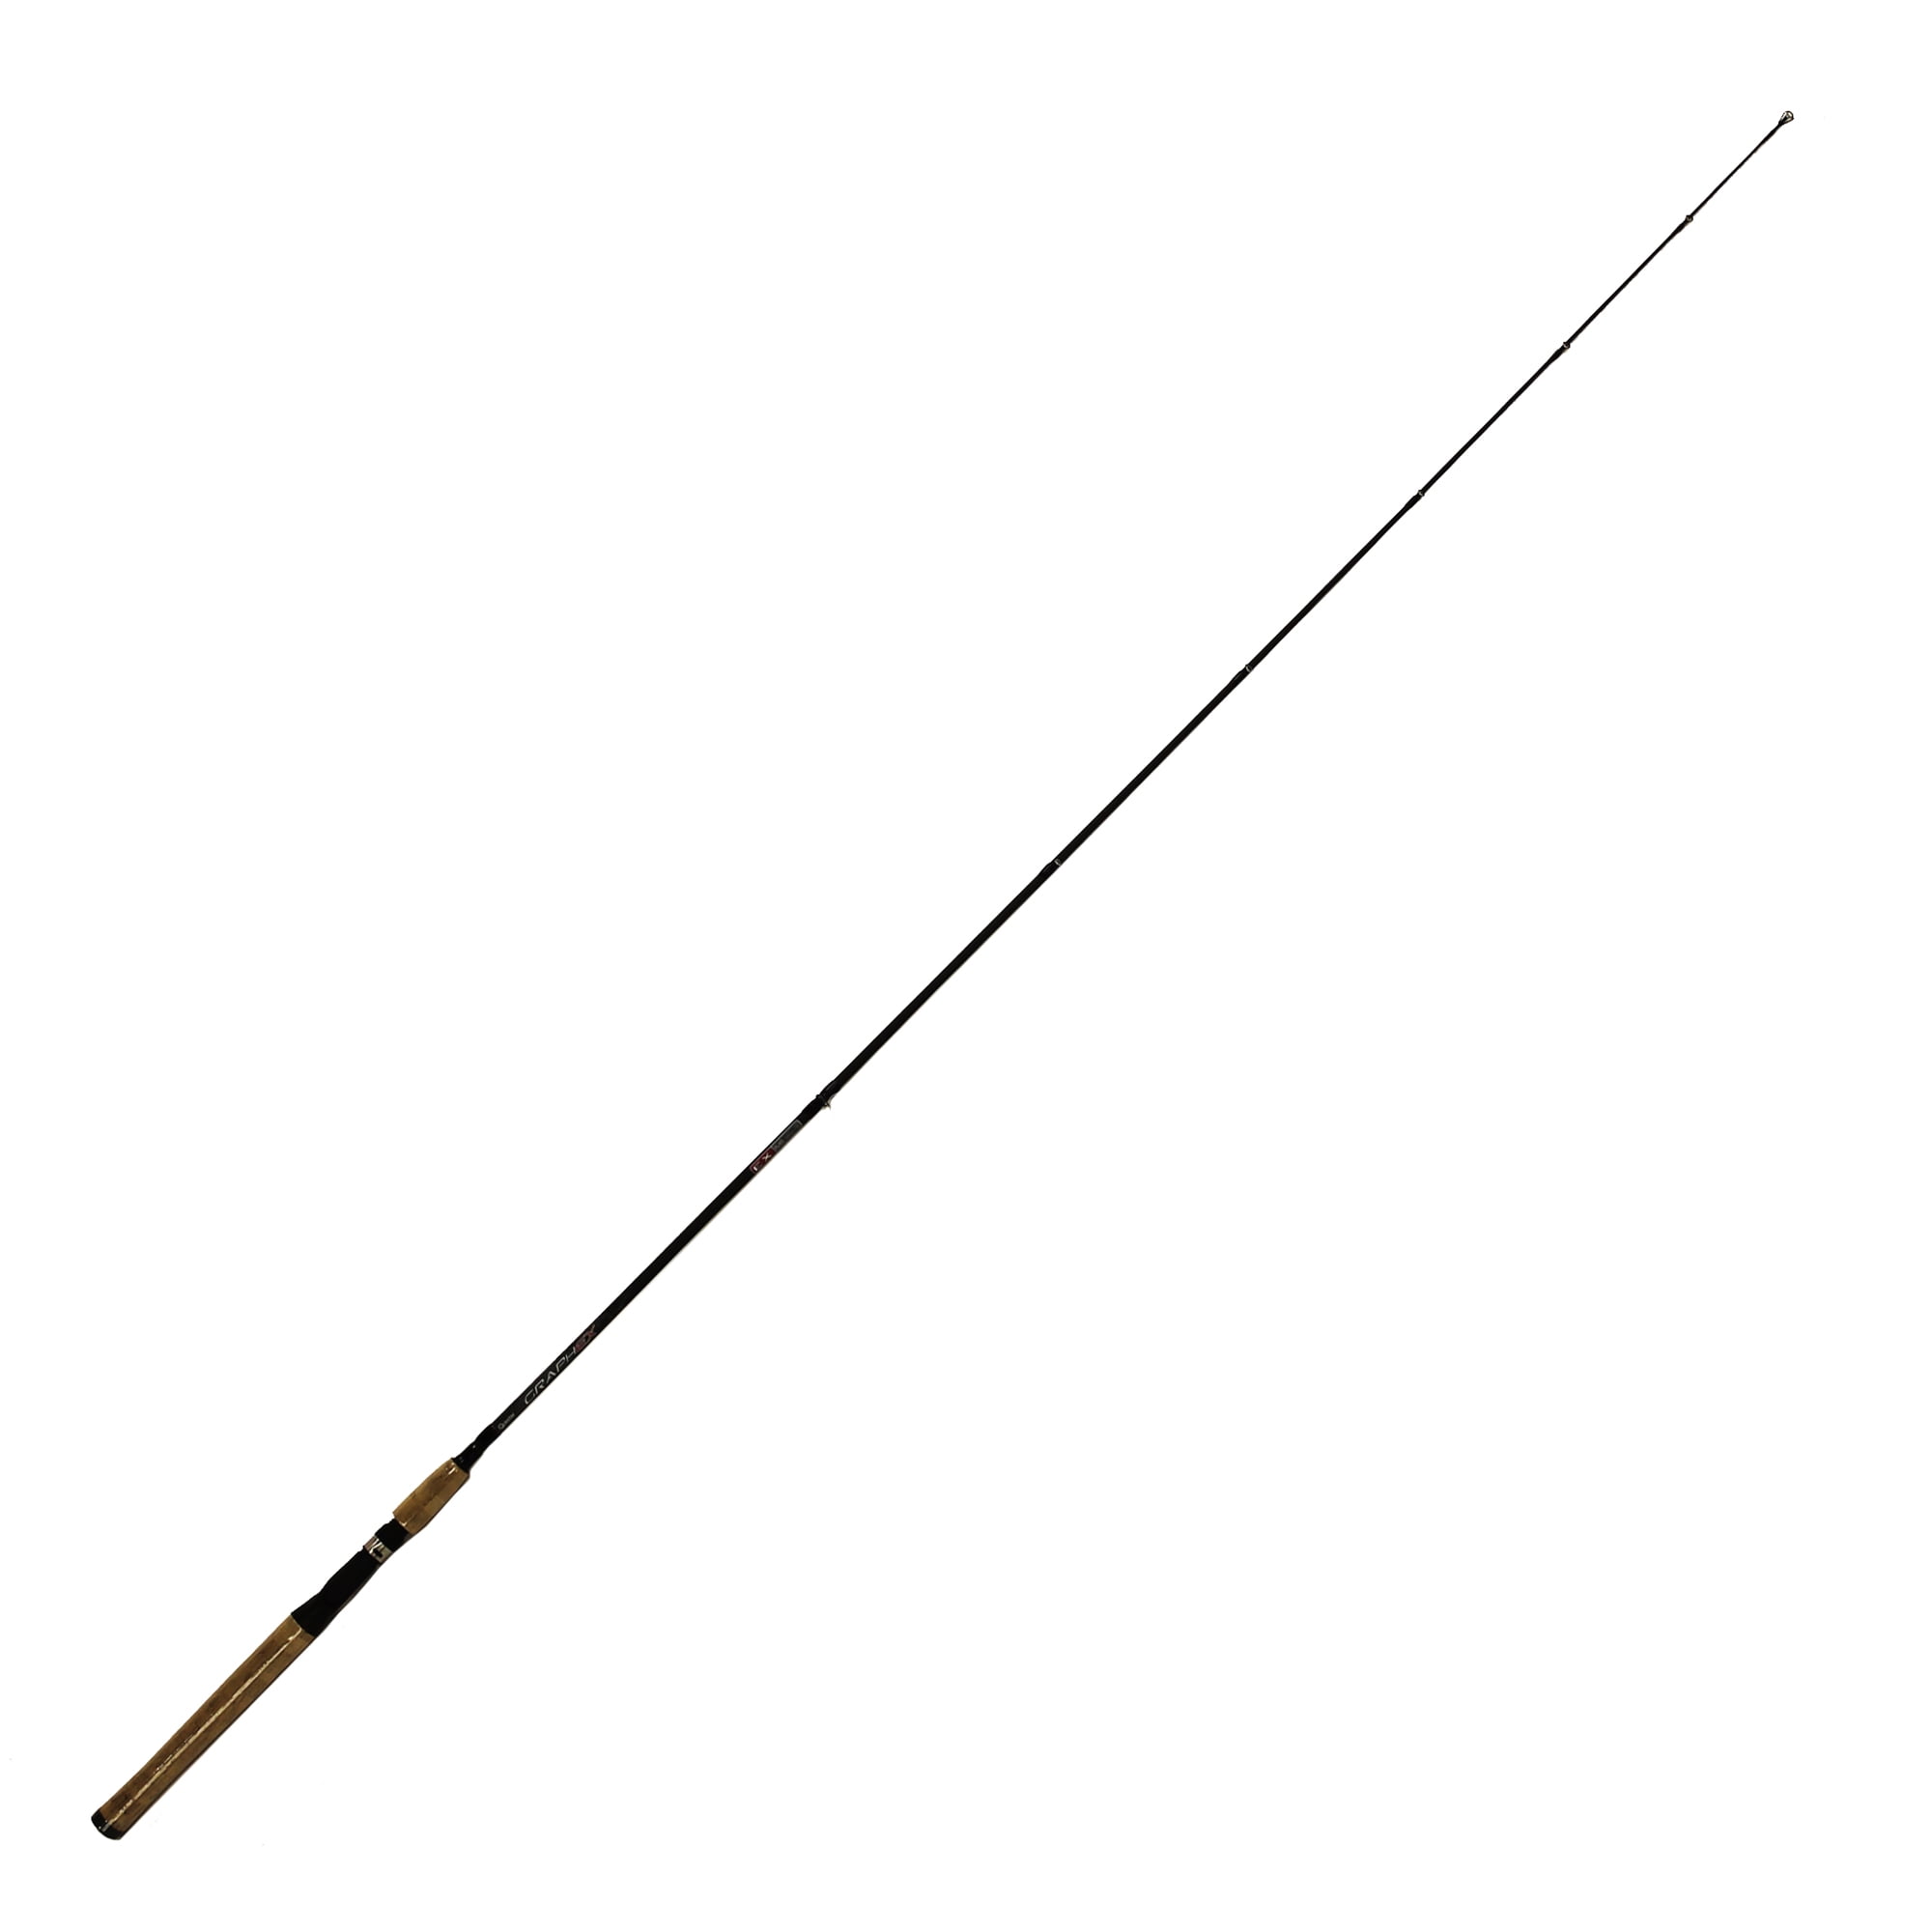  Quantum Graphex Casting Fishing Rod, 6-Foot 6-Inch 1-Piece  IM6 Graphite Rod Bonded